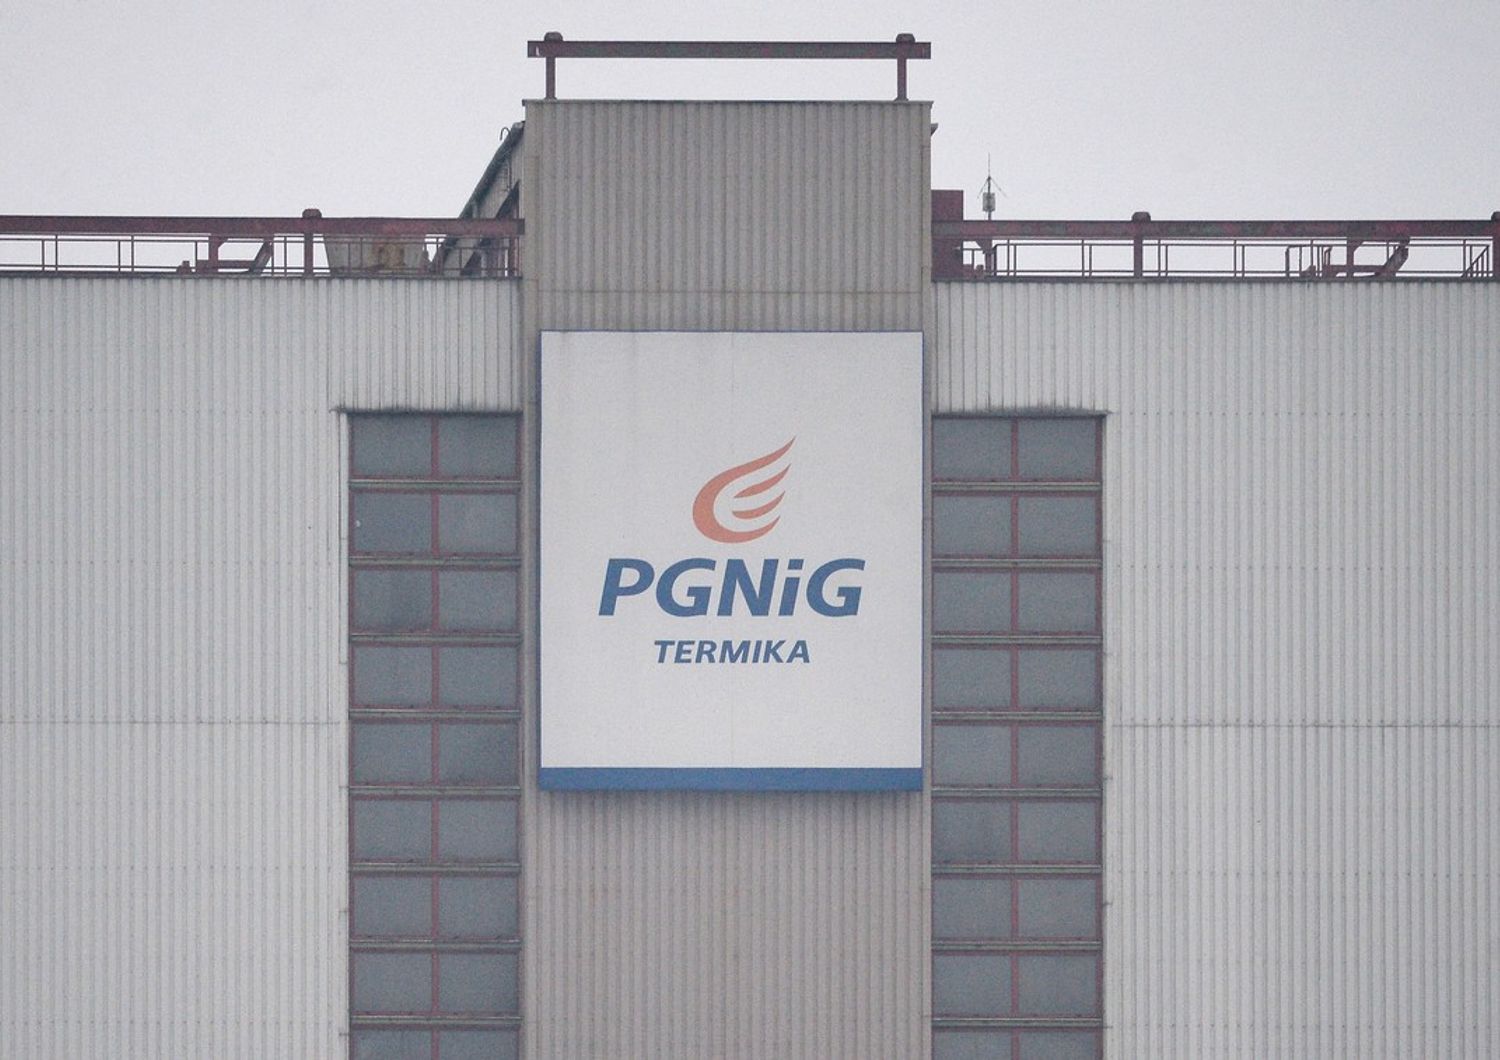 Compagnia energetica polacca, PGNiG